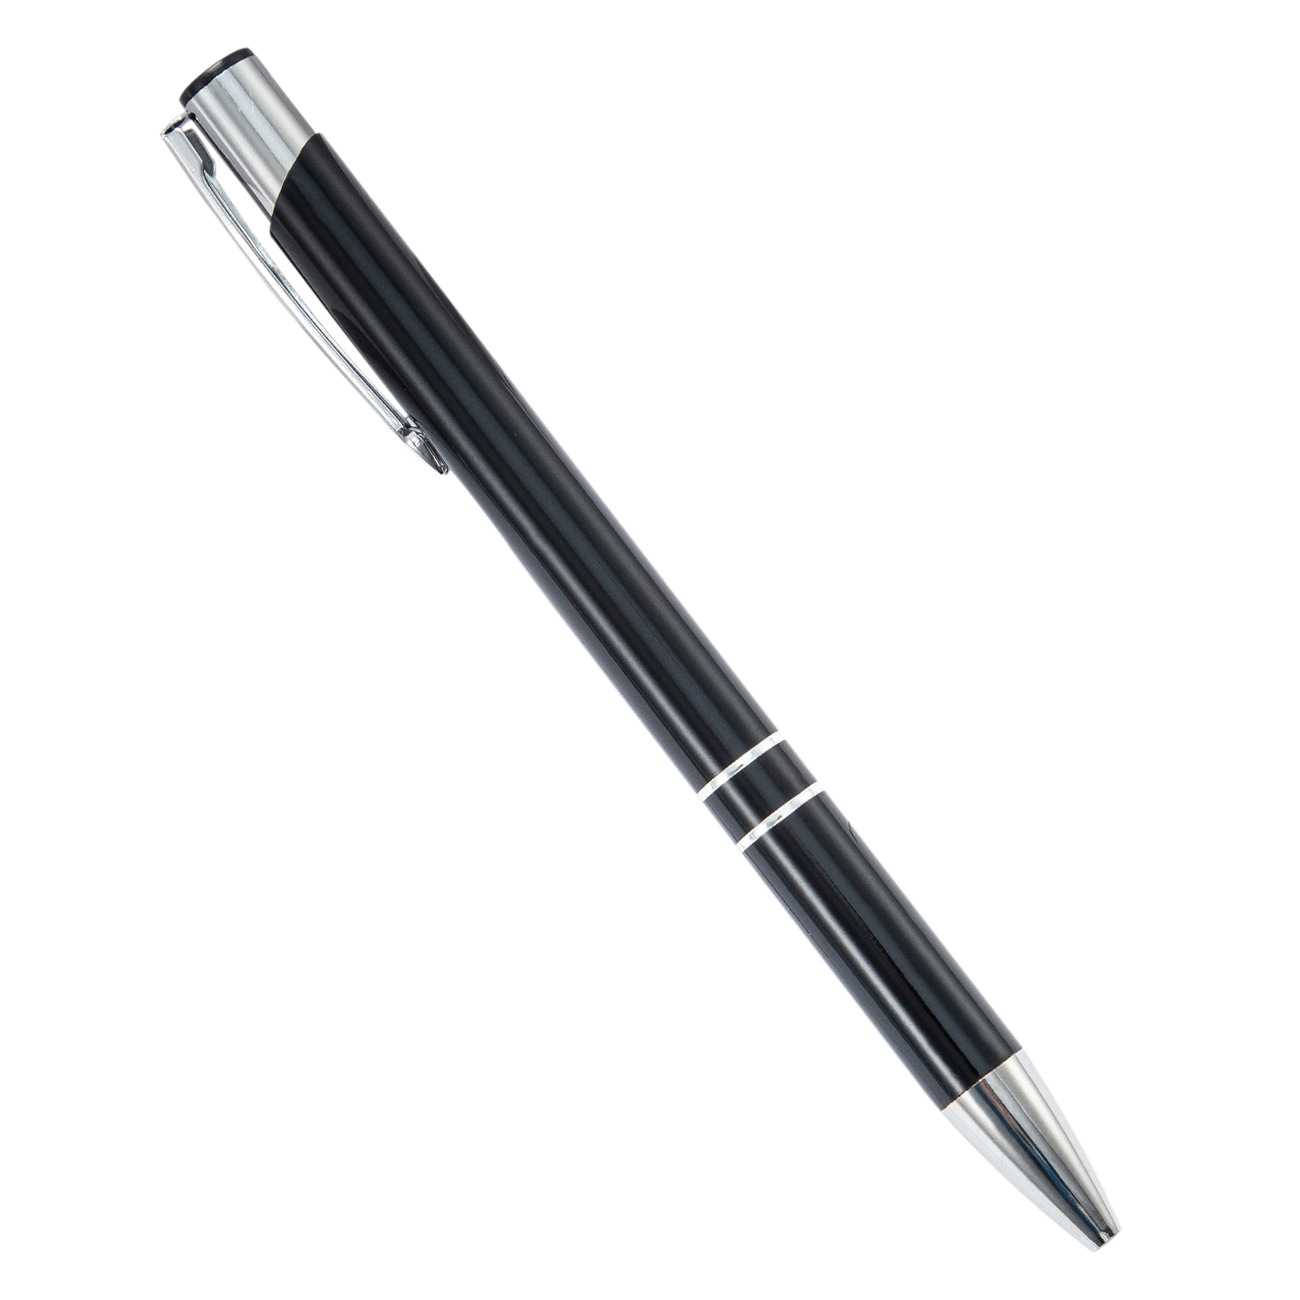 Metal Ballpoint Pen Press the Aluminum Rod Pen